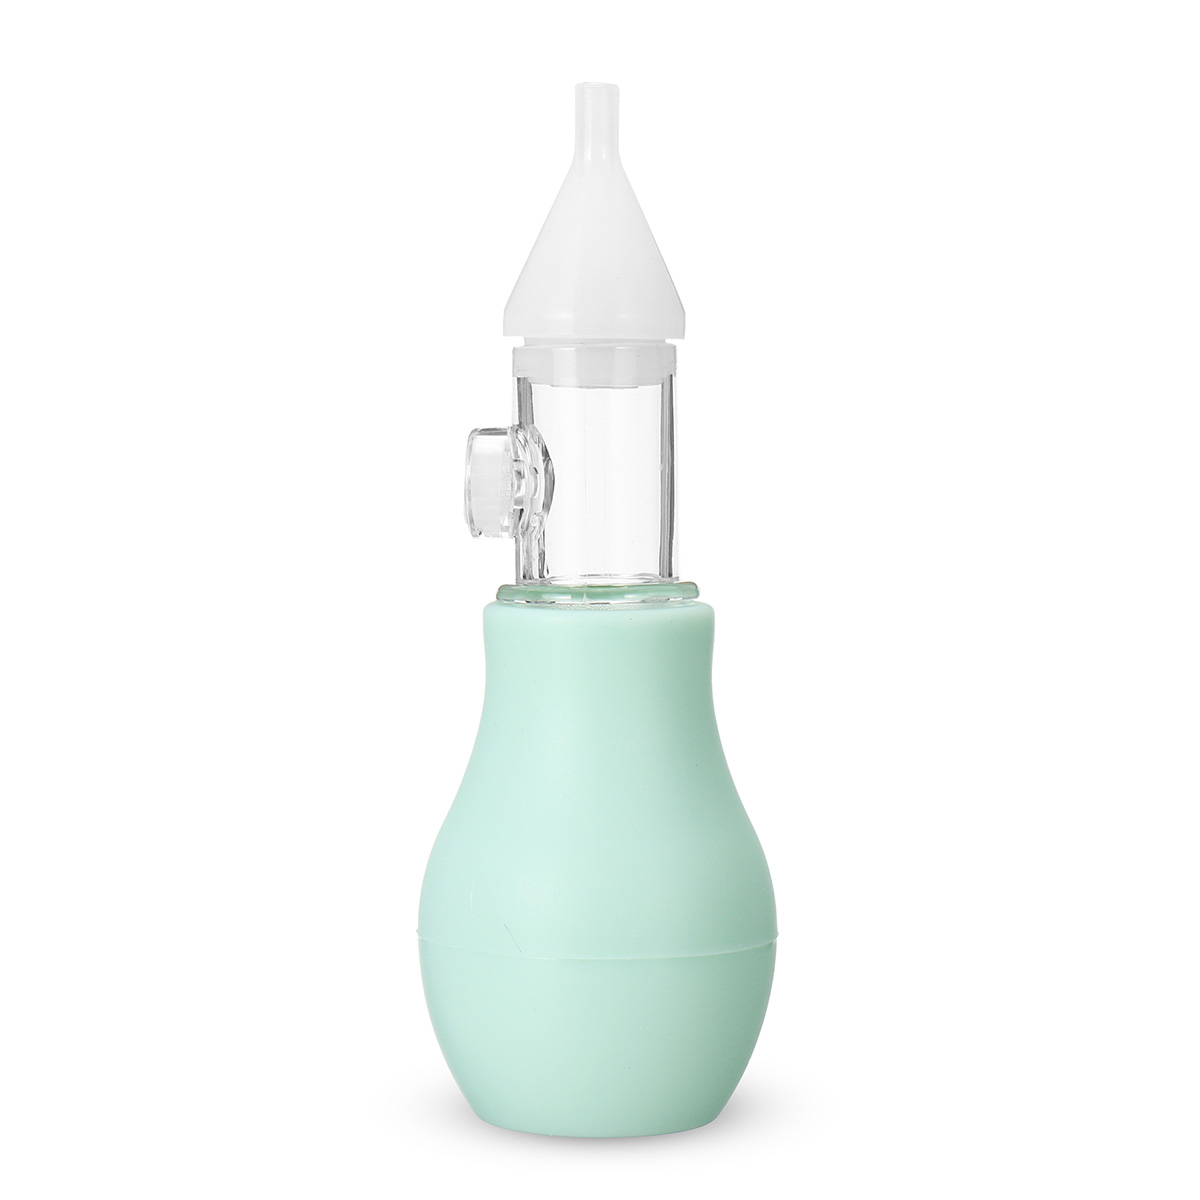 Portable Baby Nasal Aspirator Newborn Toddler Nasal Absorption Safety Vacuum Sucker Nose Cleaner Household Health Care